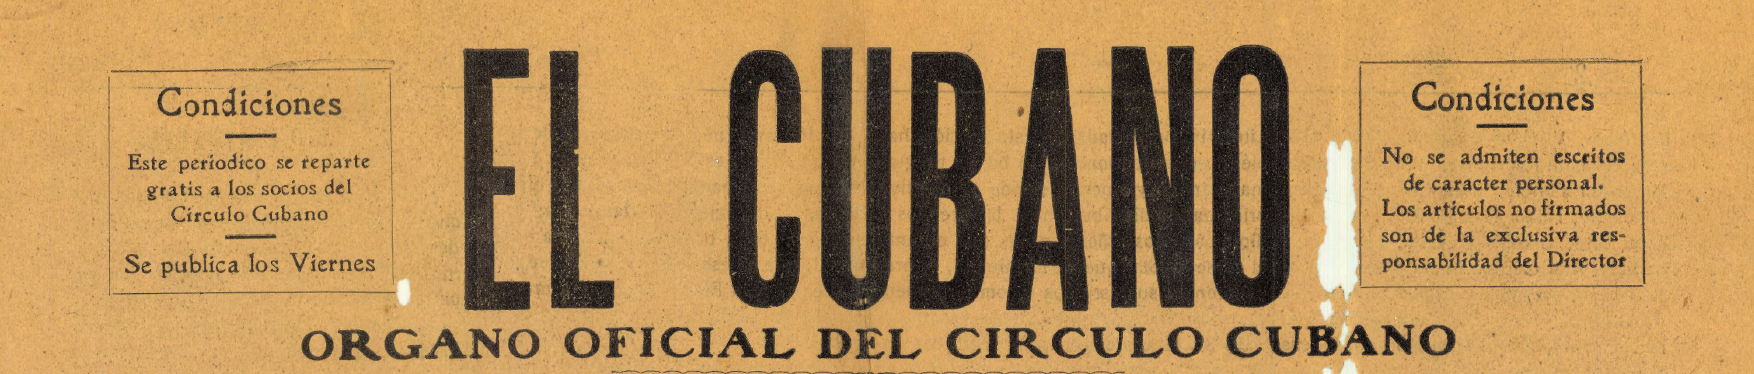 Cuban Club Archives